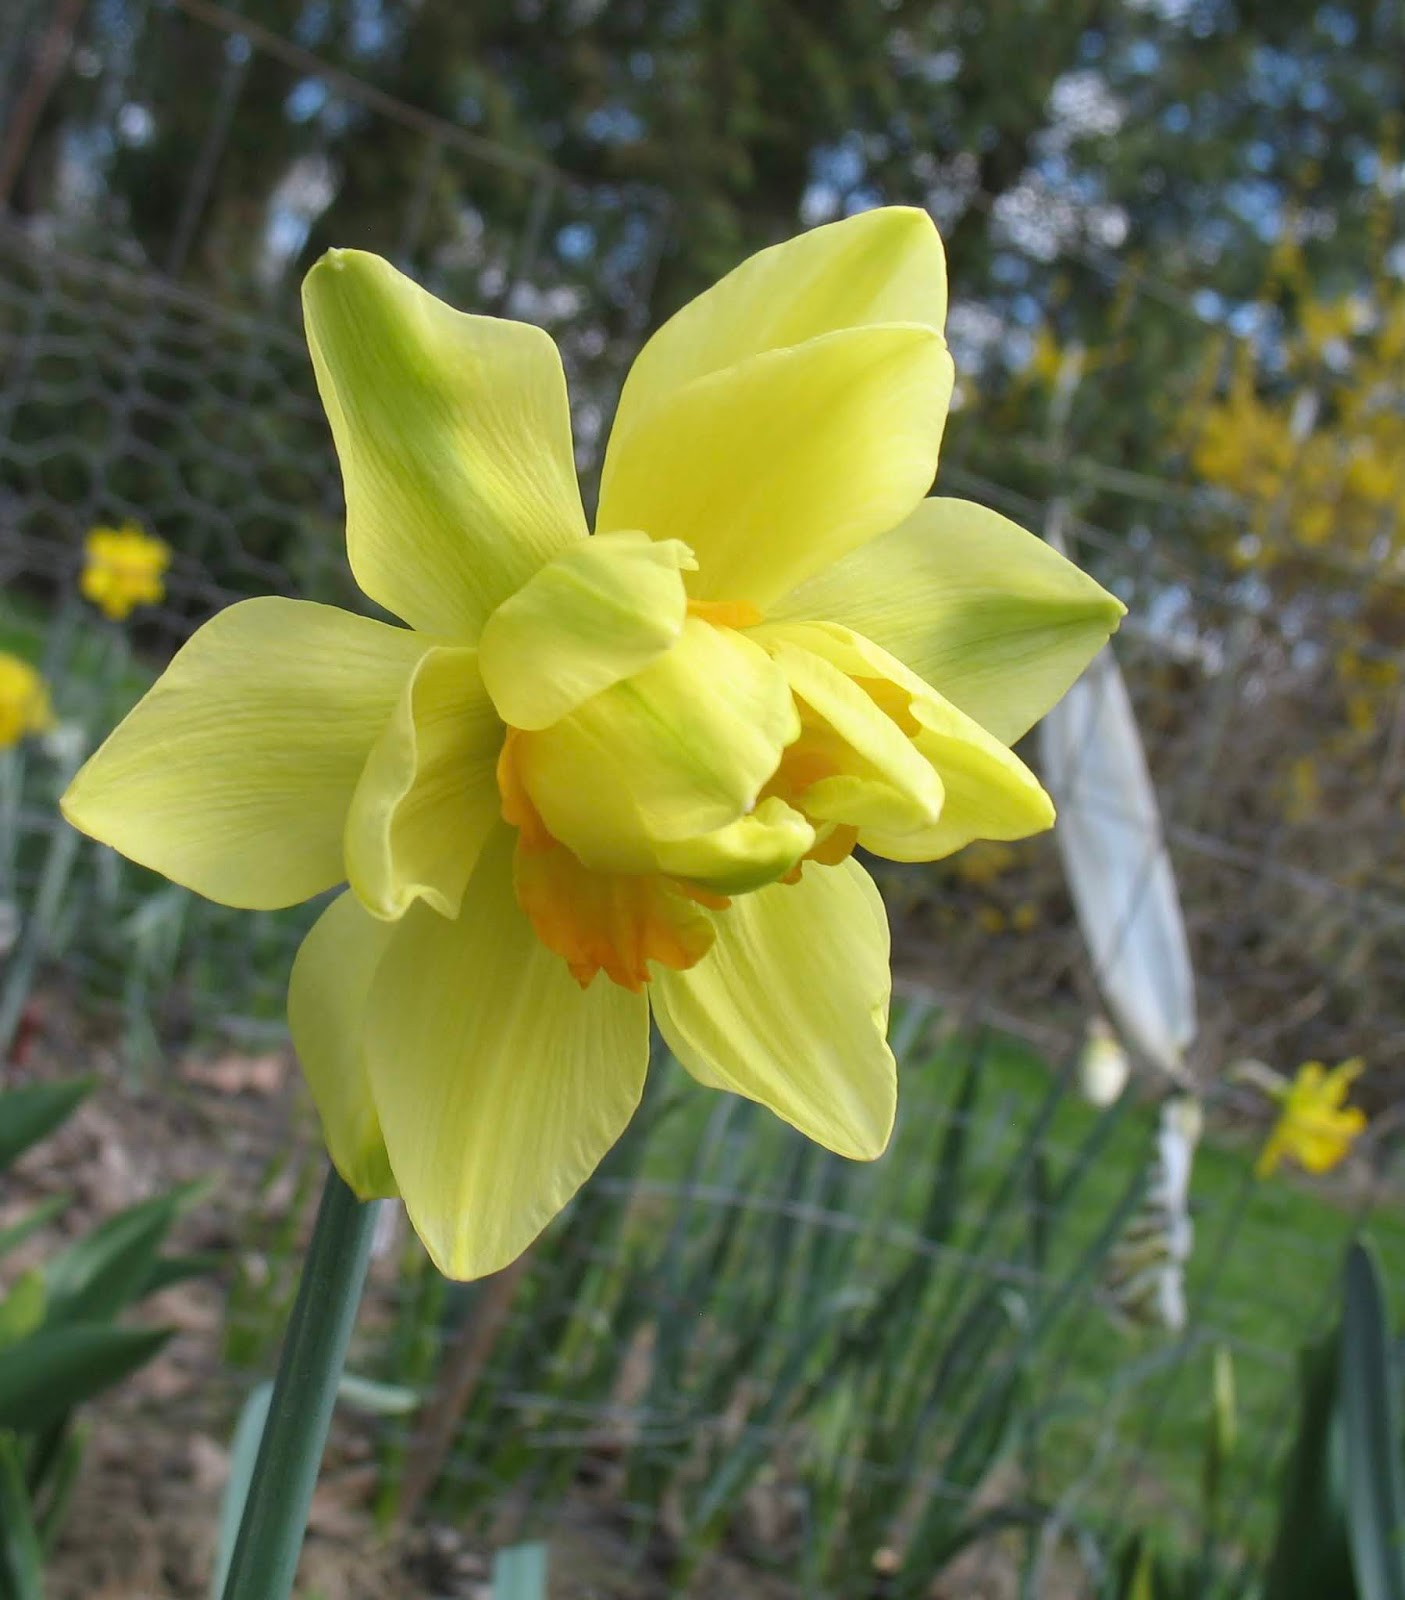 muddleaged: Daffodils 2020